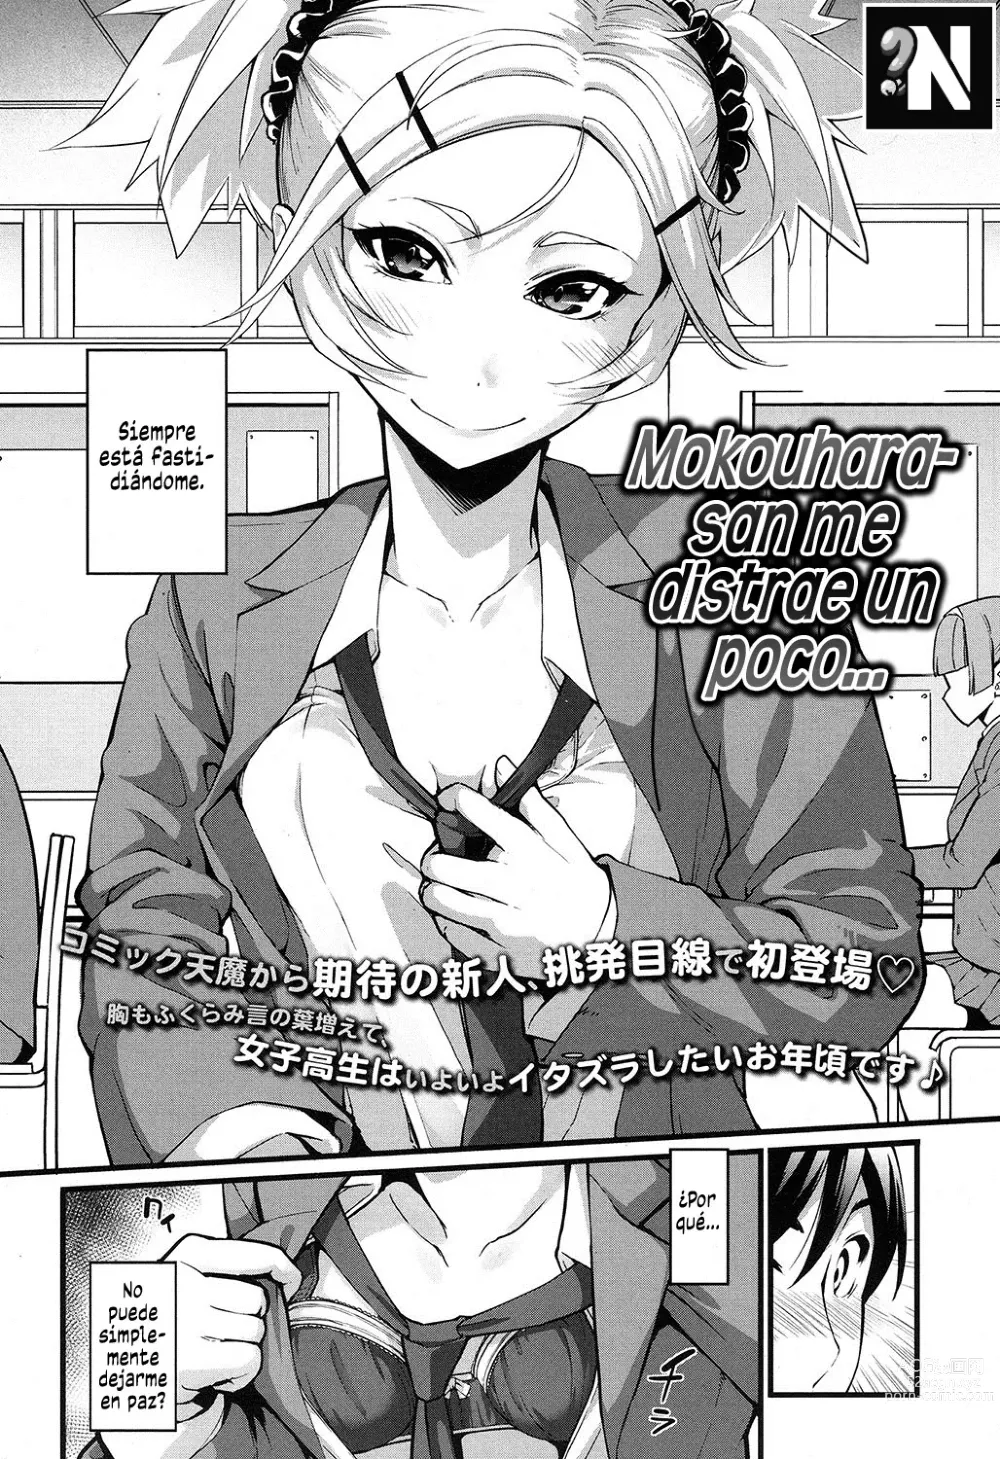 Page 2 of manga Mukouhara-san me Molesta un Poco